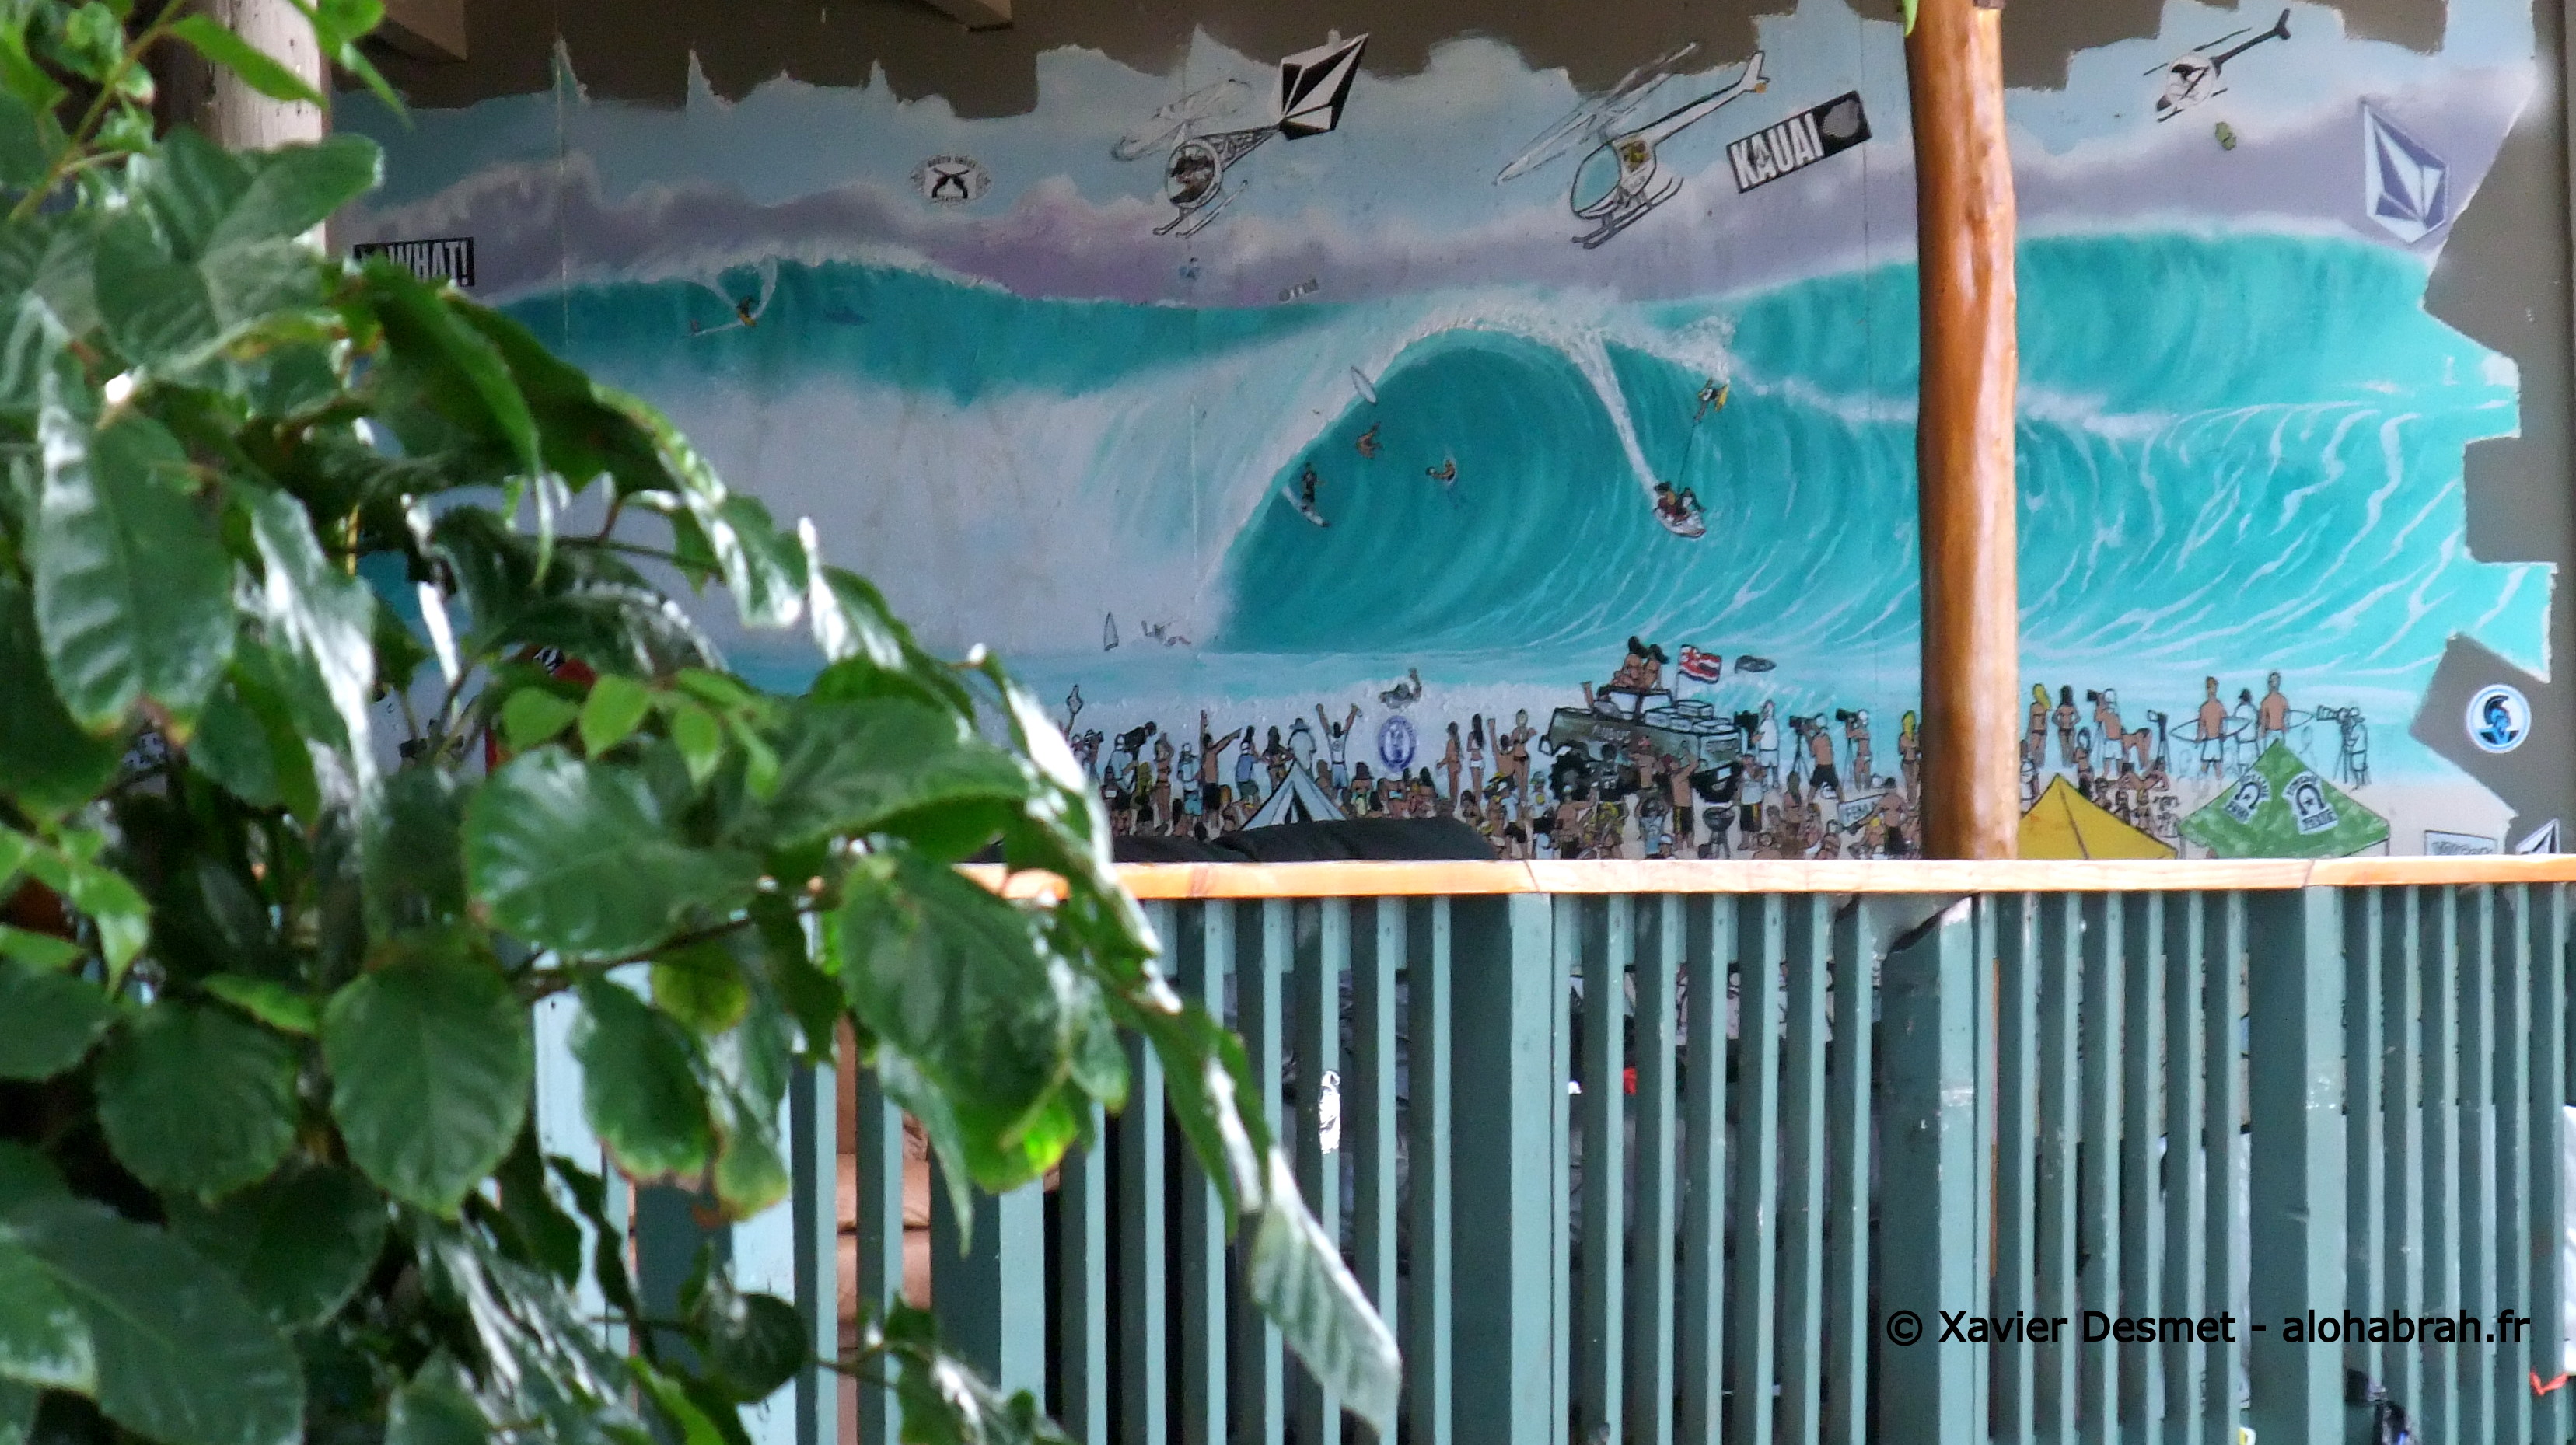 La fresque du mur de la seconde Pipe House de Volcom © Xavier Desmet - alohabrah.fr